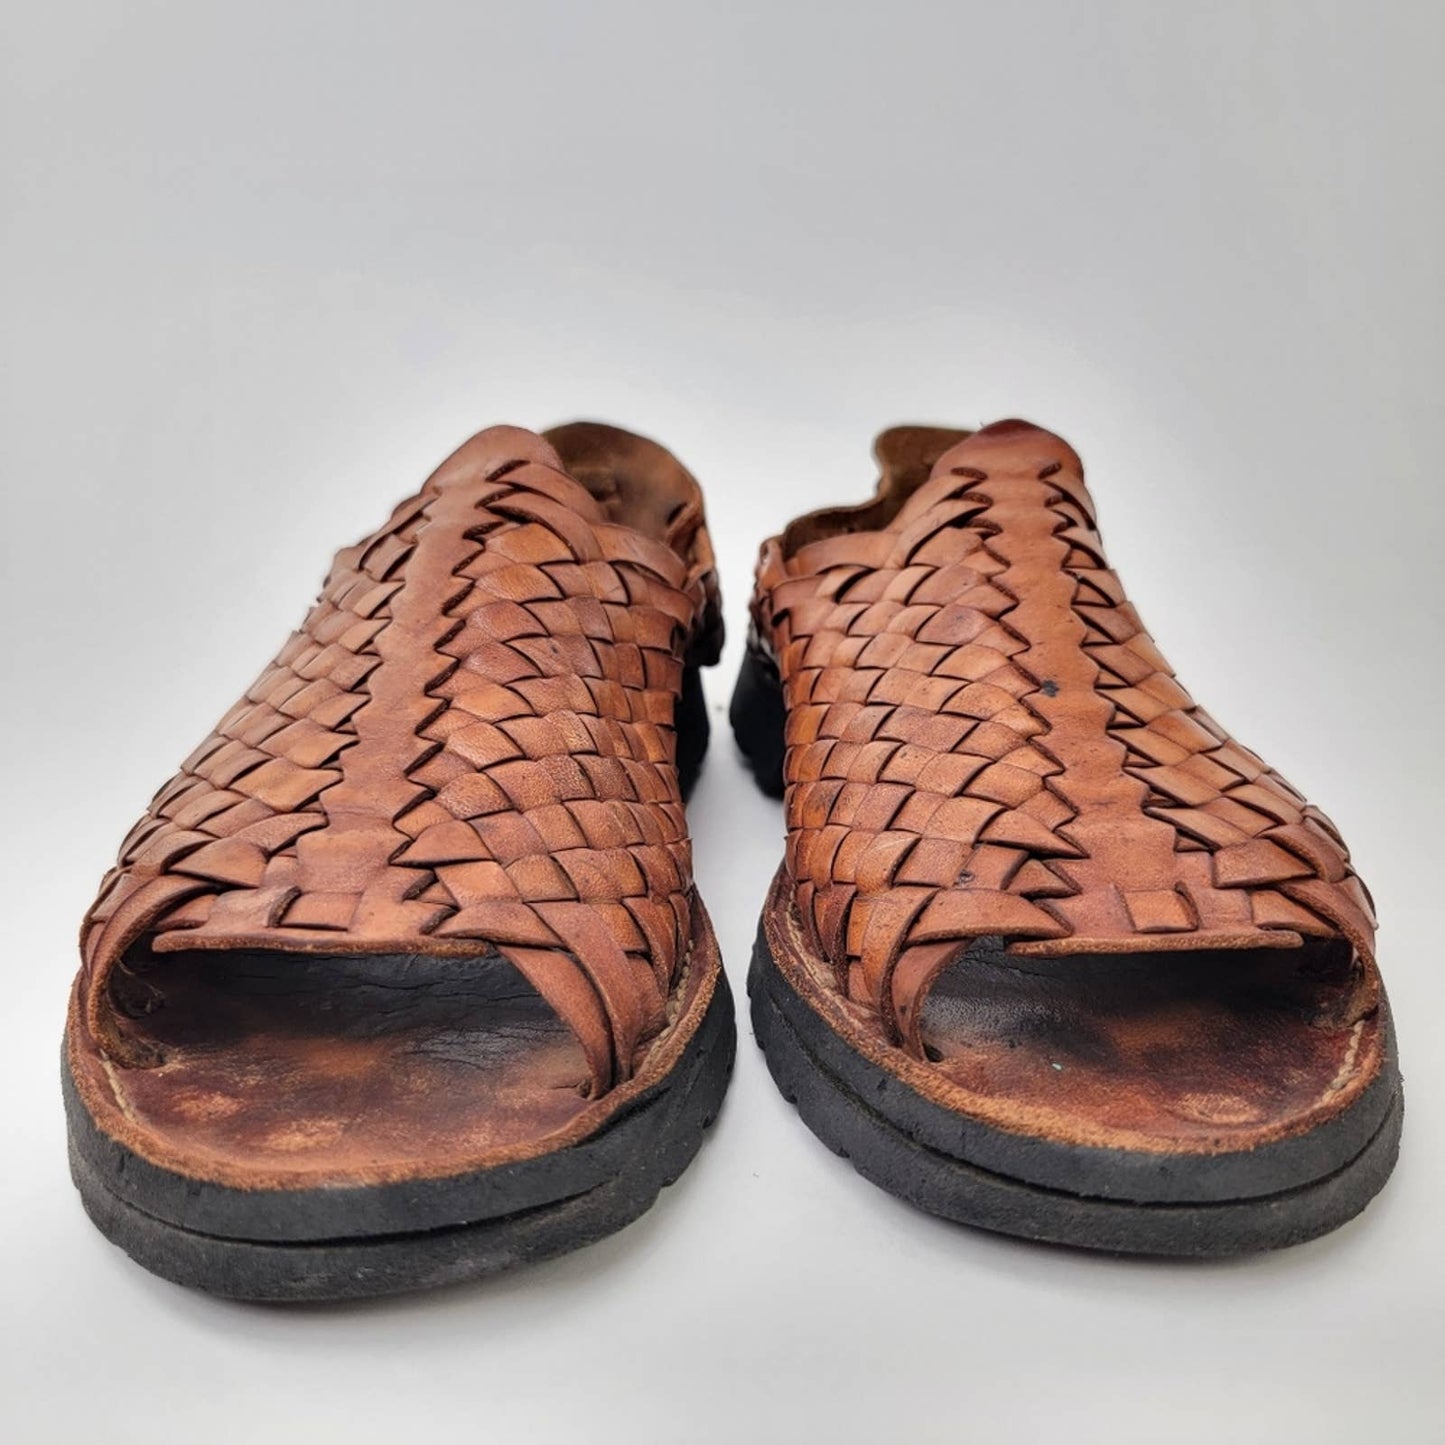 Brand X Ranchero Huarache Leather Fisherman Sandals - 12